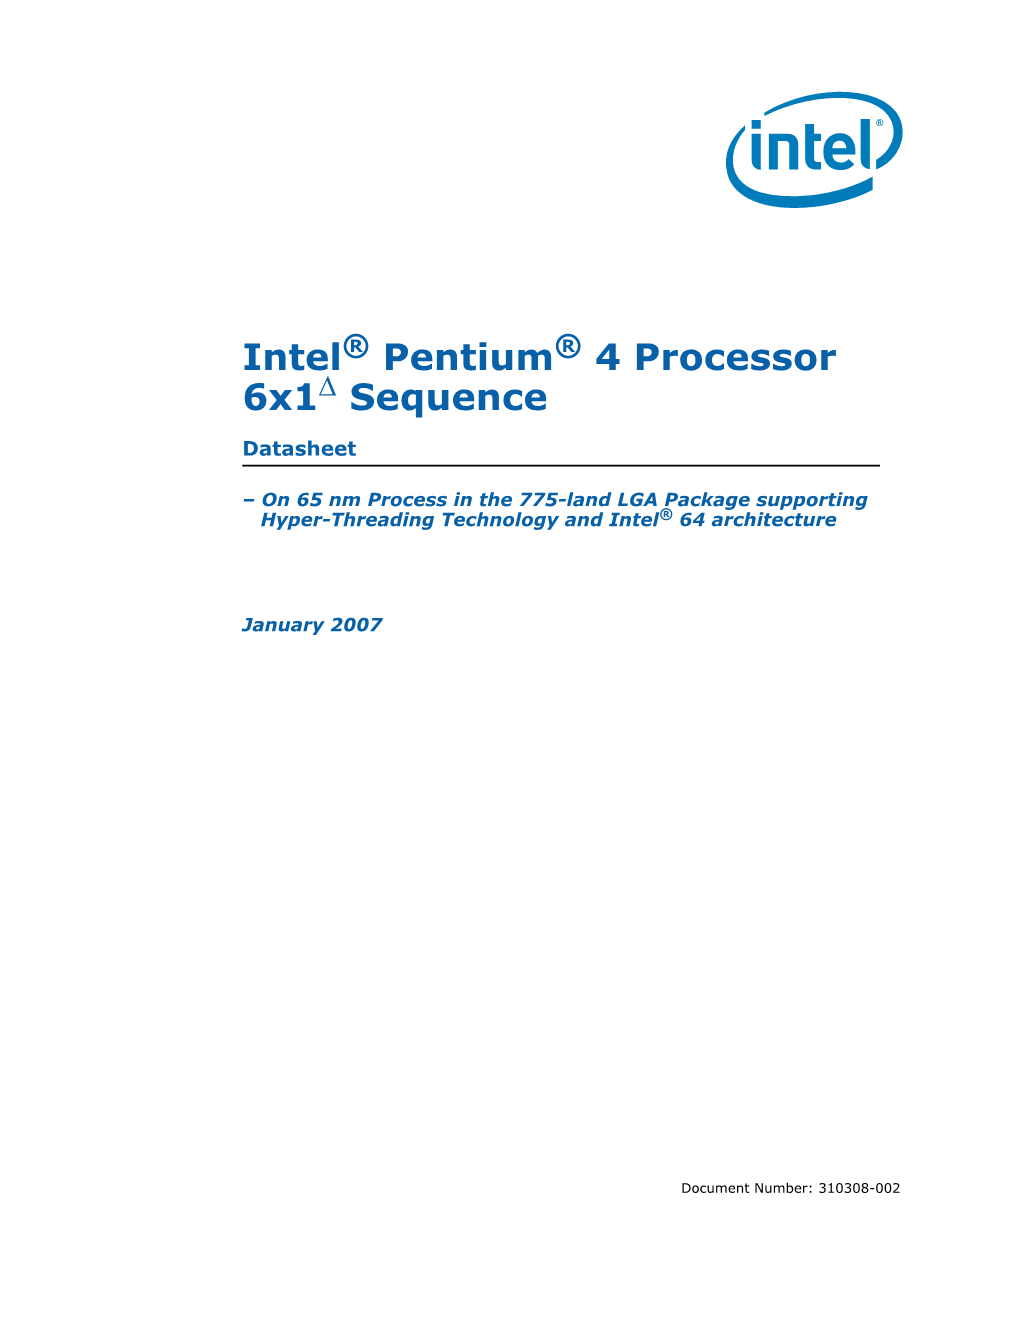 Intel® Pentium® 4 Processor 6X1δ Sequence Datasheet